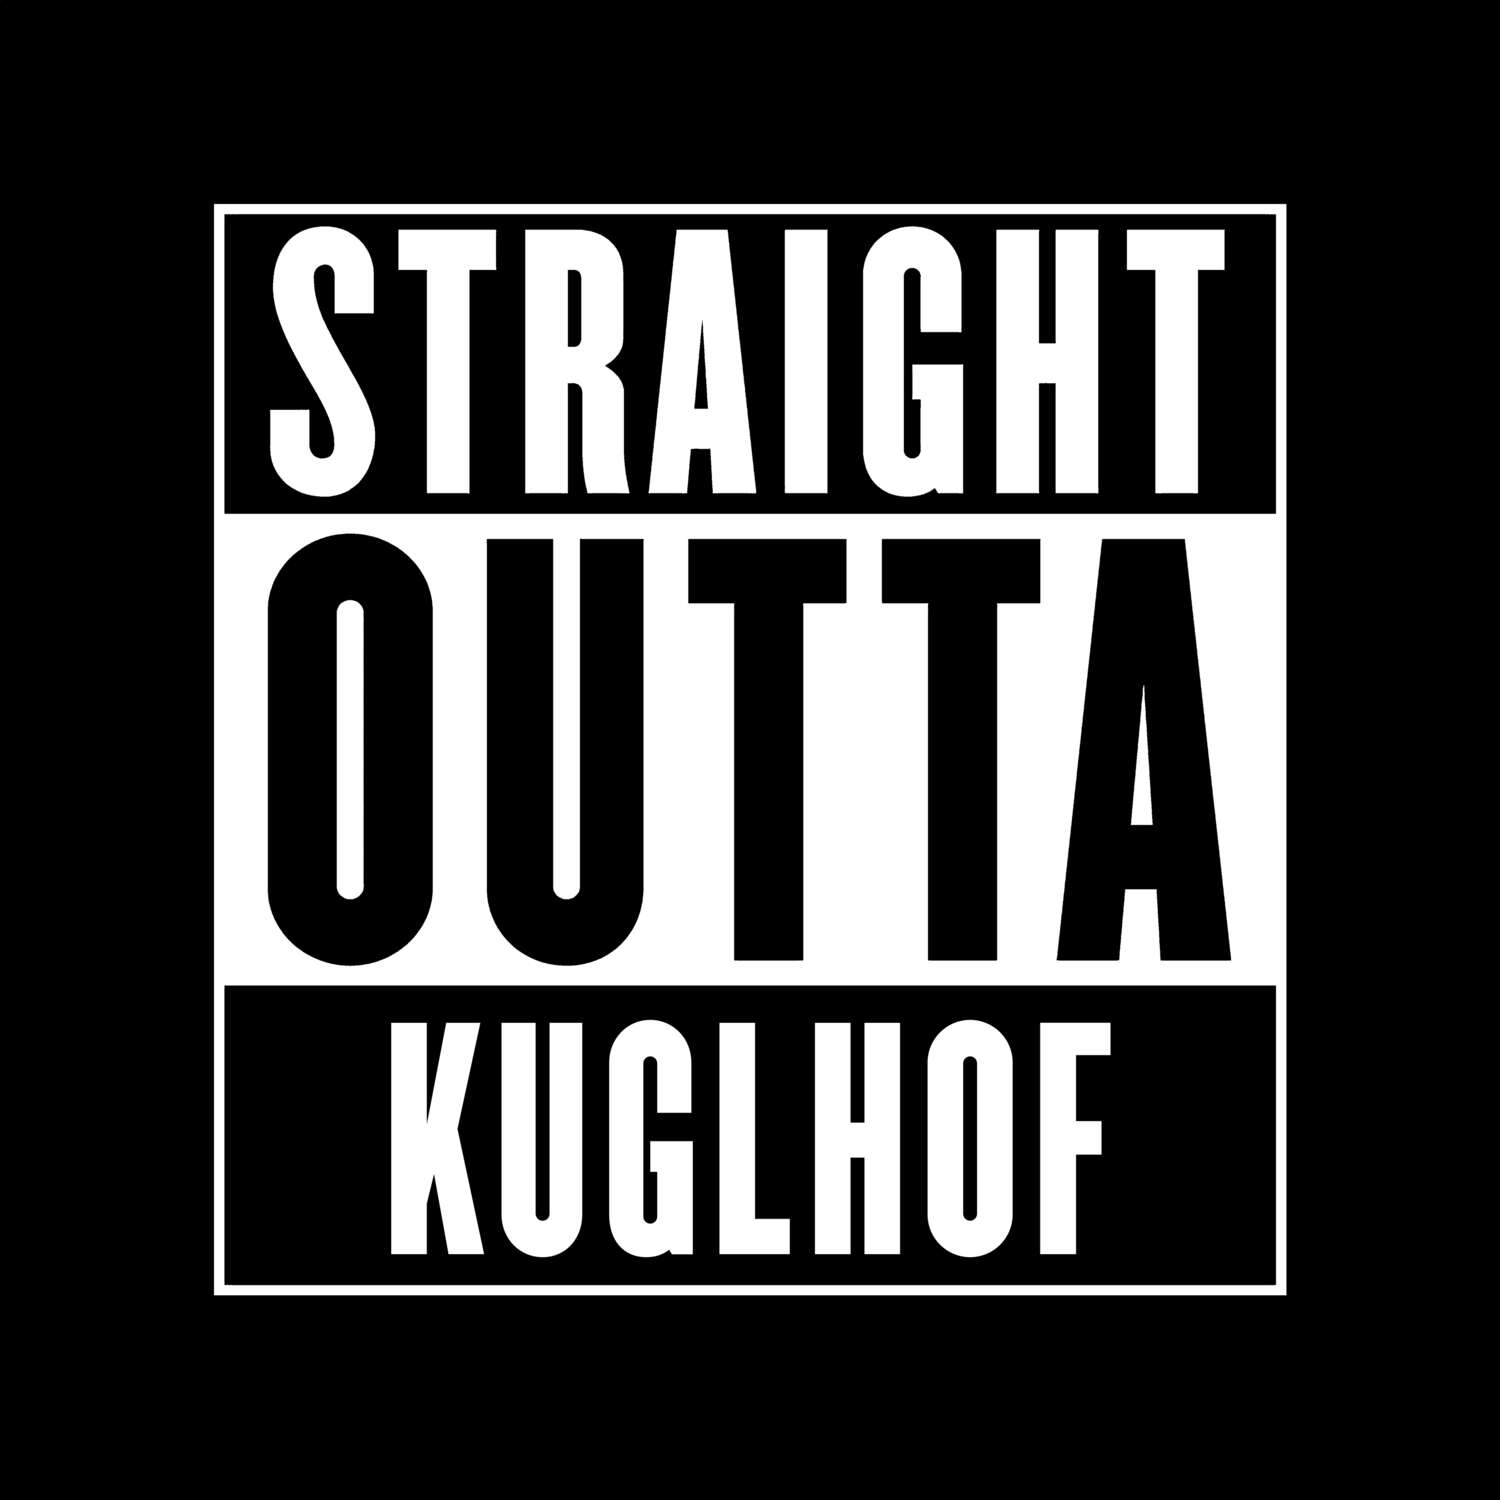 Kuglhof T-Shirt »Straight Outta«